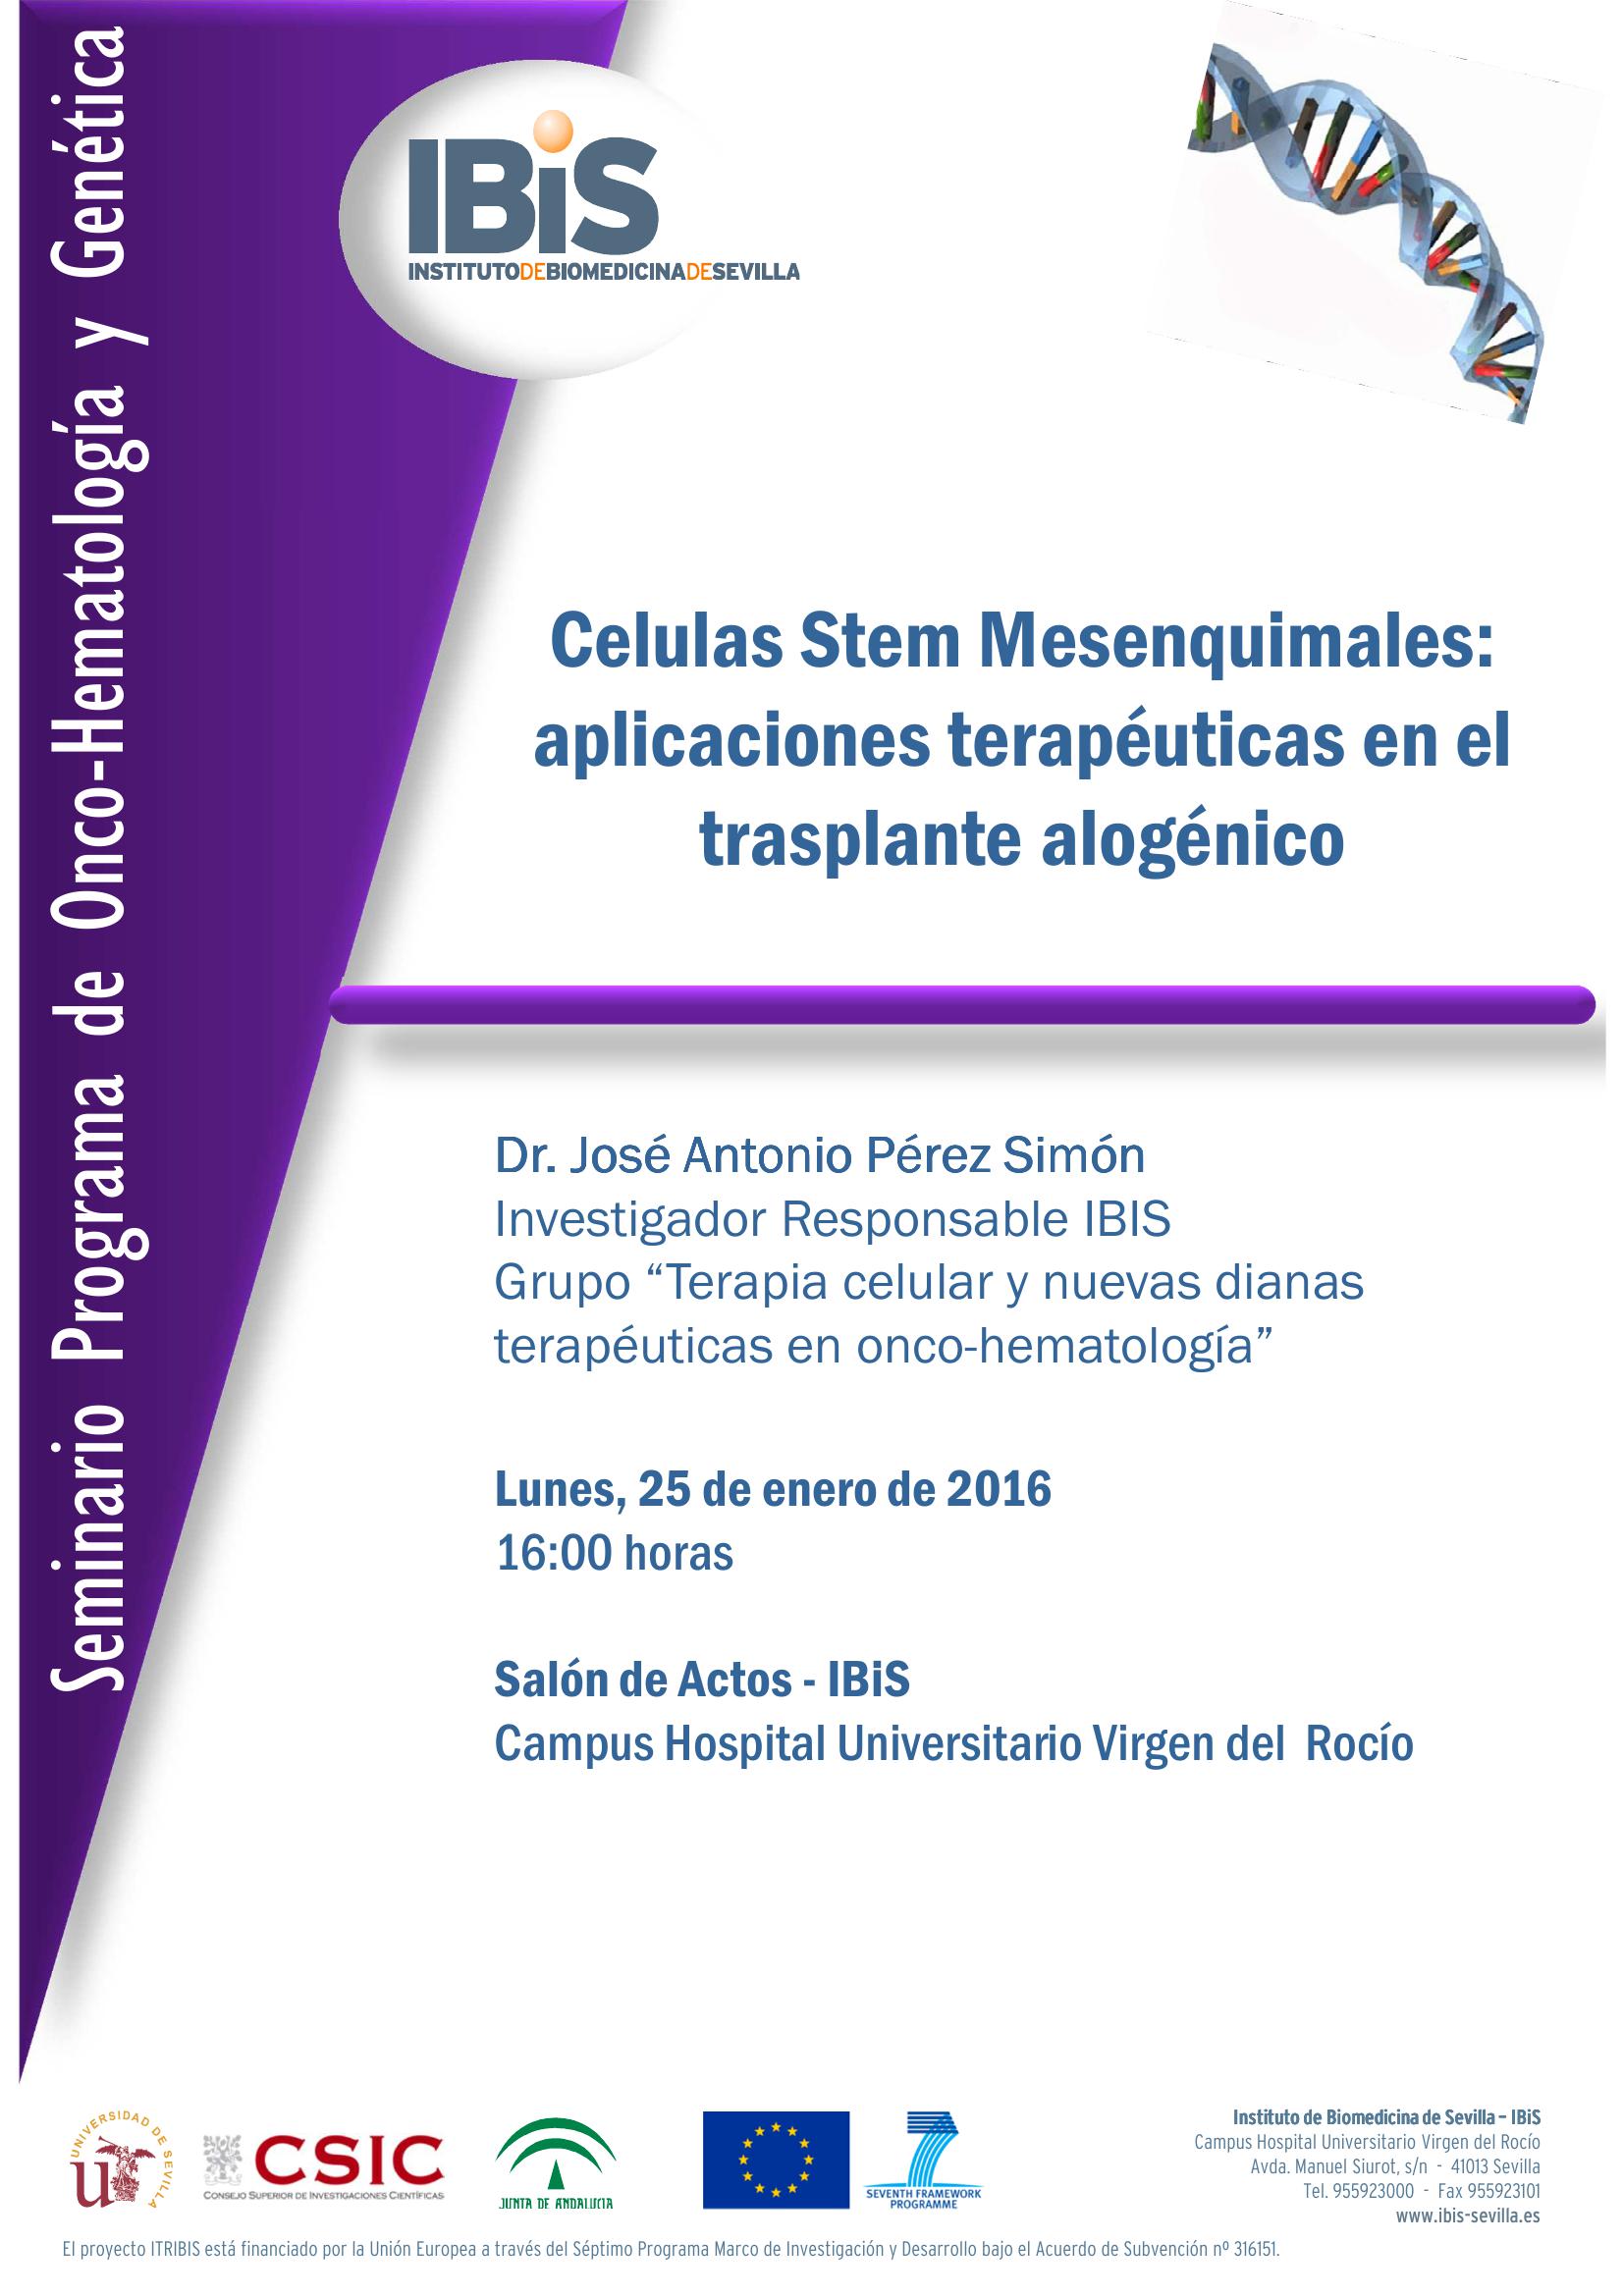 Poster: Celulas Stem Mesenquimales: aplicaciones terapéuticas en el trasplante alogénico